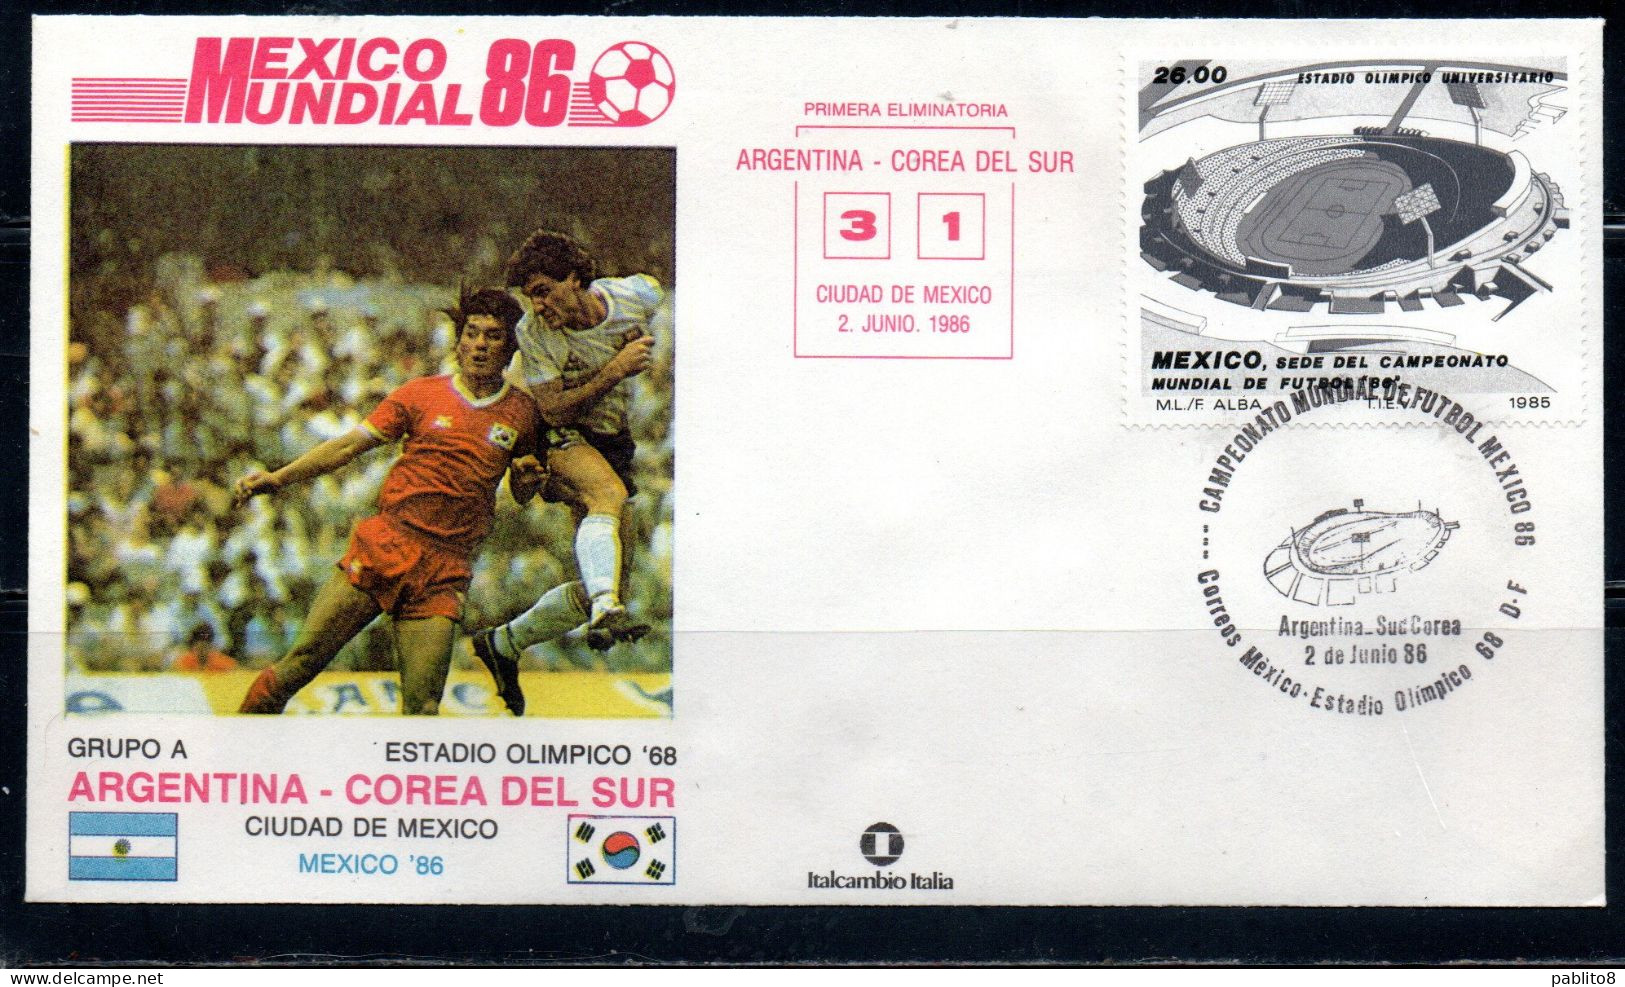 MEXICO 86 MESSICO 1986 SOCCER FIFA WORLD CUP CALCIO ARGENTINA - COREA DEL SUR SOUTH SUD 3-1 CIUDAD DE MEXICO FDC COVER - Mexiko